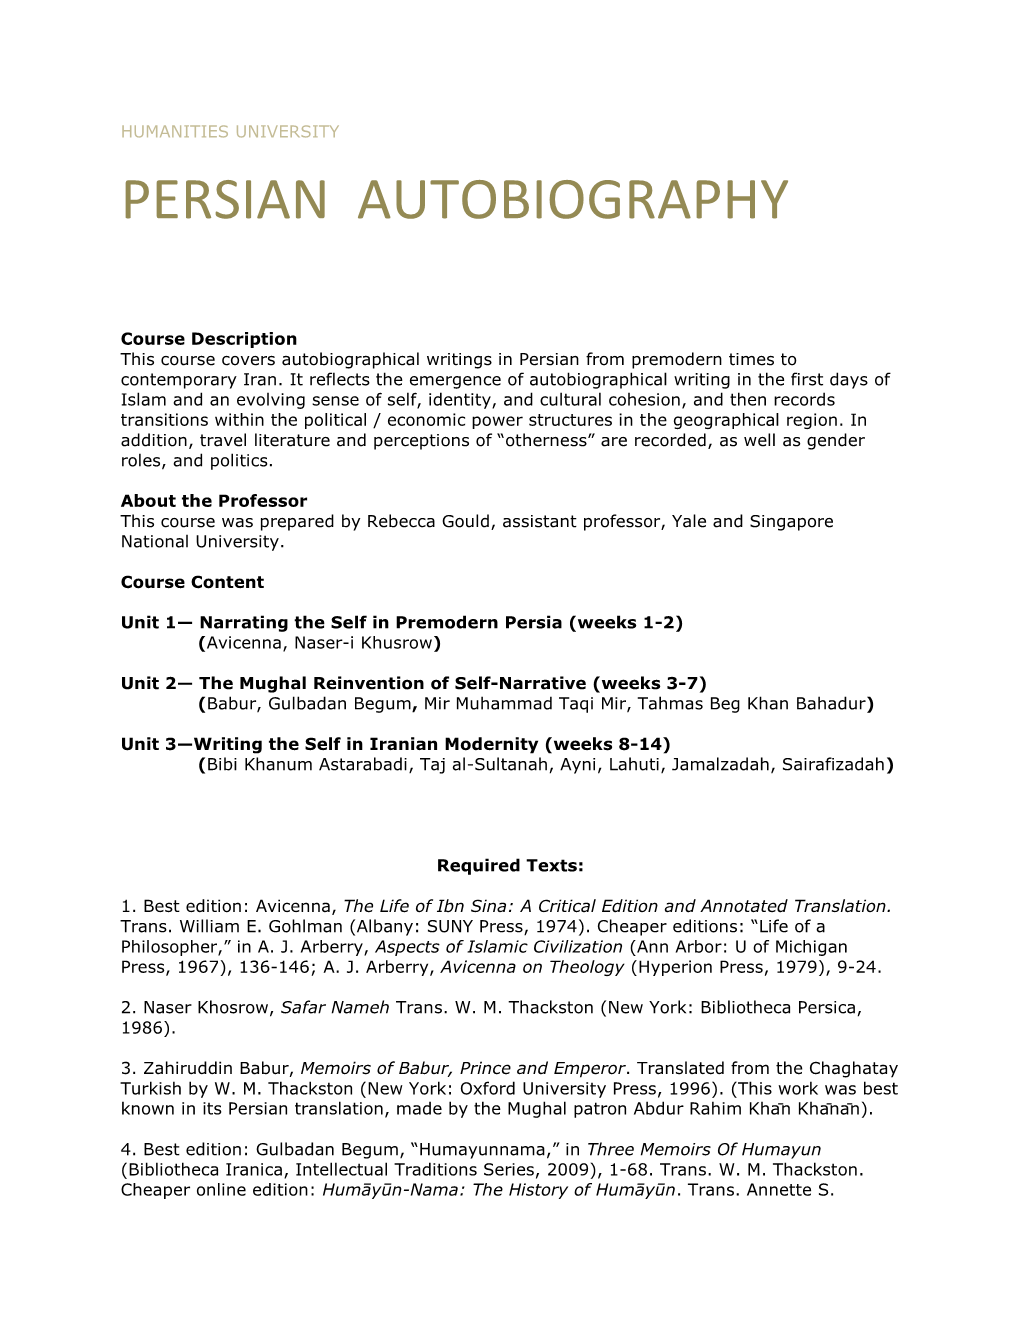 Persian Autobiography